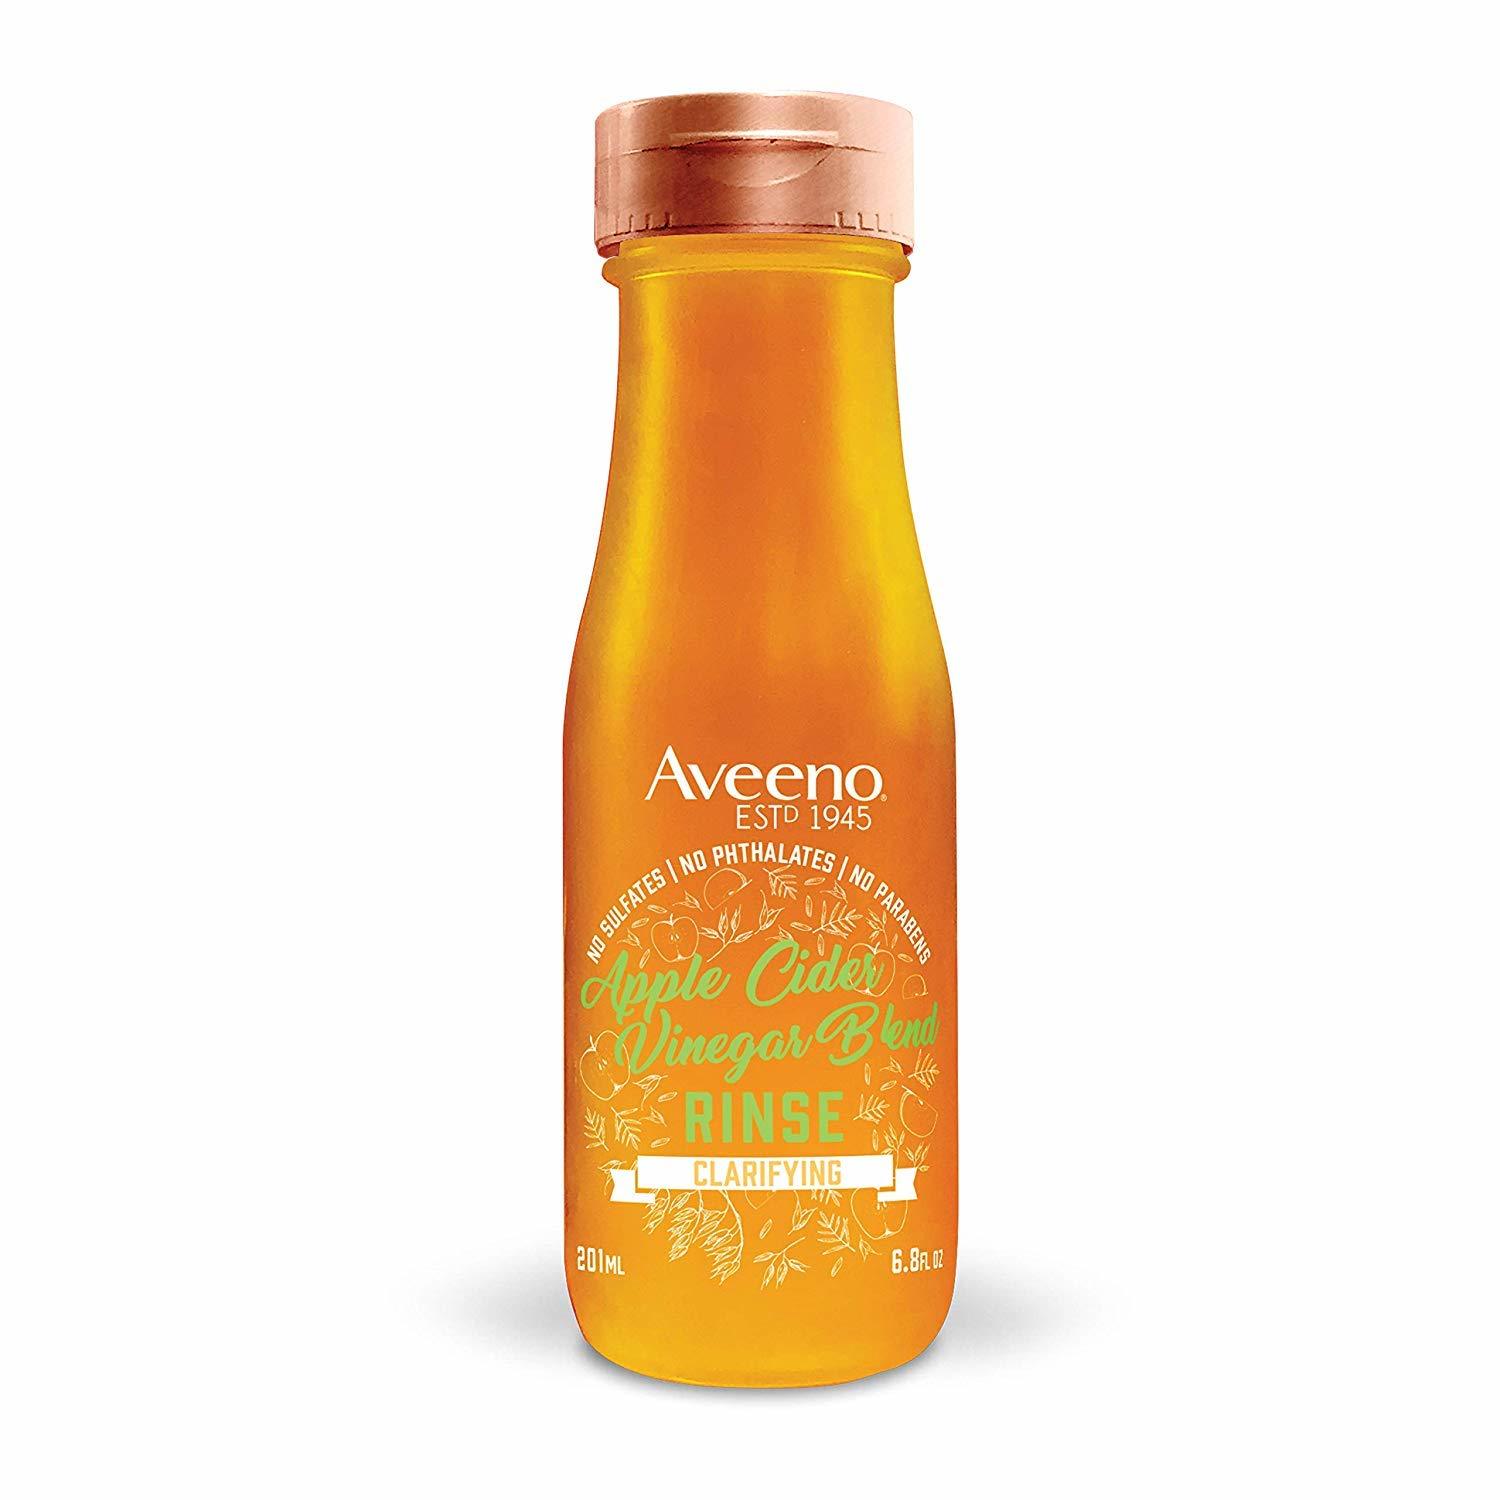 Primary image for Aveeno Hair Rinse Apple Cider Vinegar Blend 6.8 Ounce (201ml) (2 Pack)